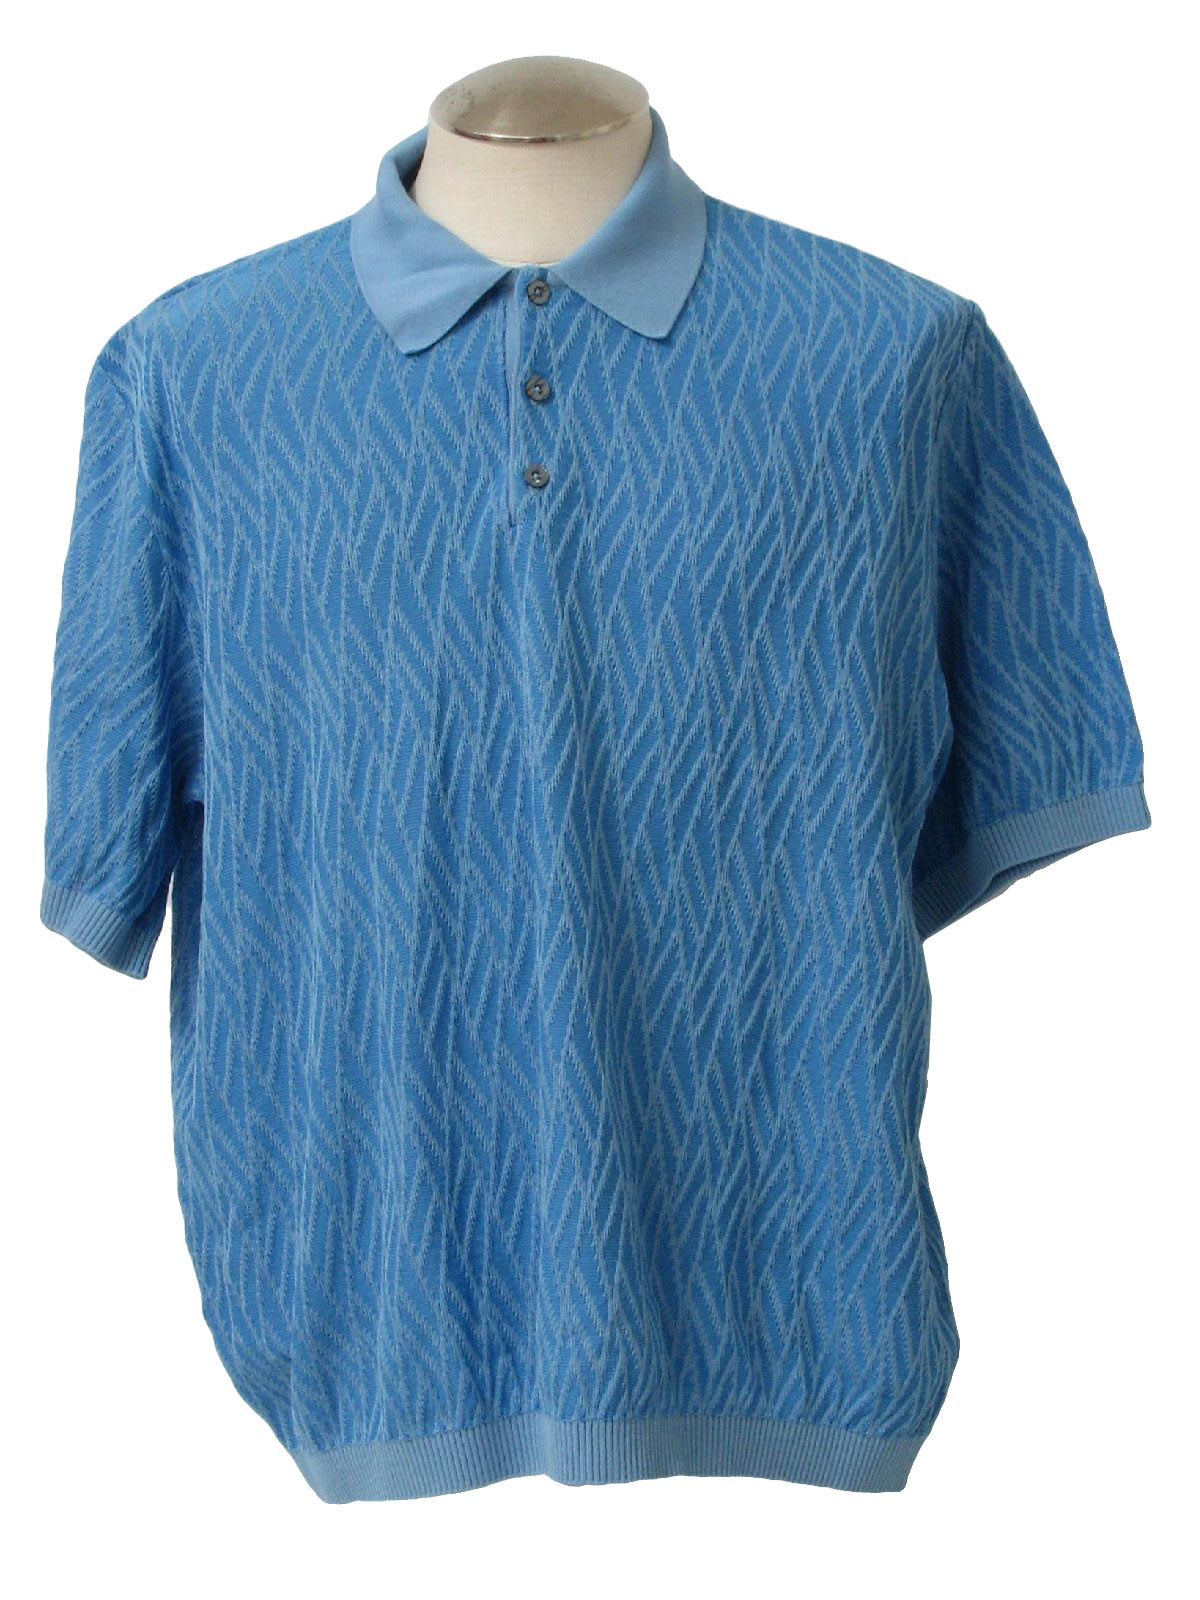 1980s St. Croix Knit Shirt: 80s -St. Croix- Mens lake blue and grey ...